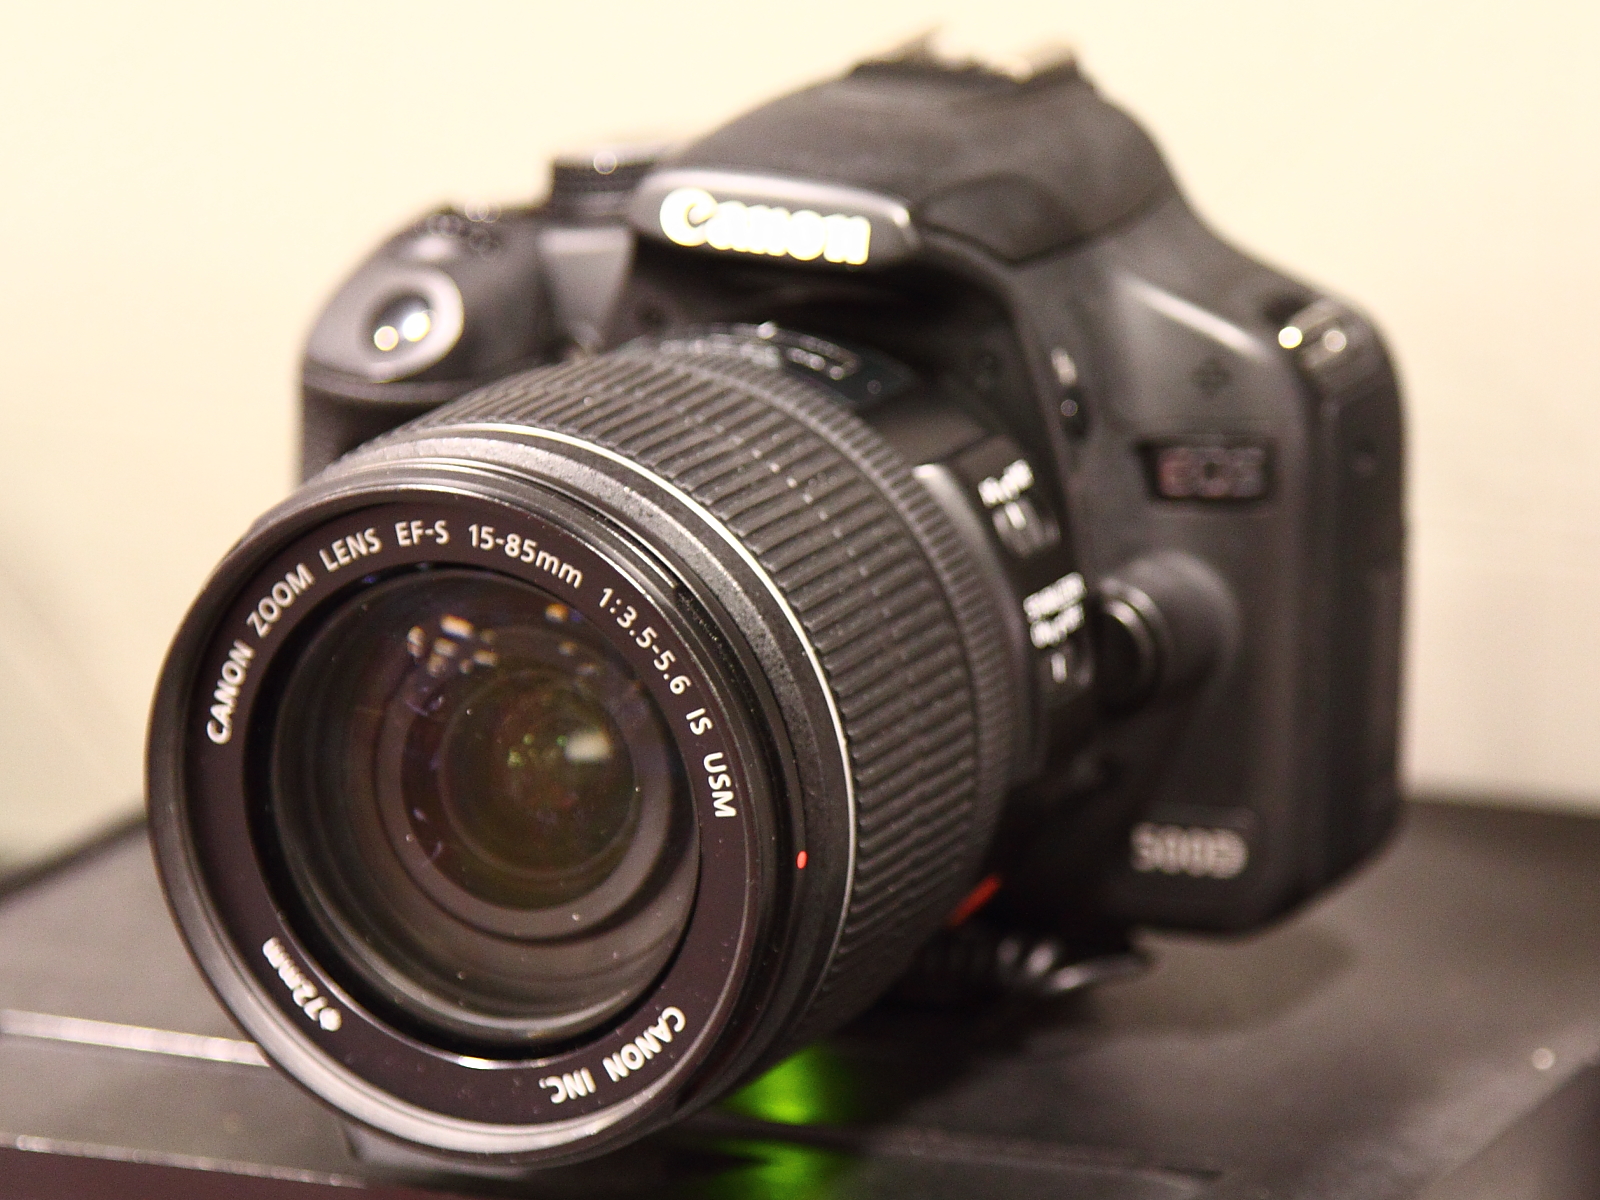 File:Canon EF-S 15-85mm on Canon EOS 500d.jpg - Wikipedia